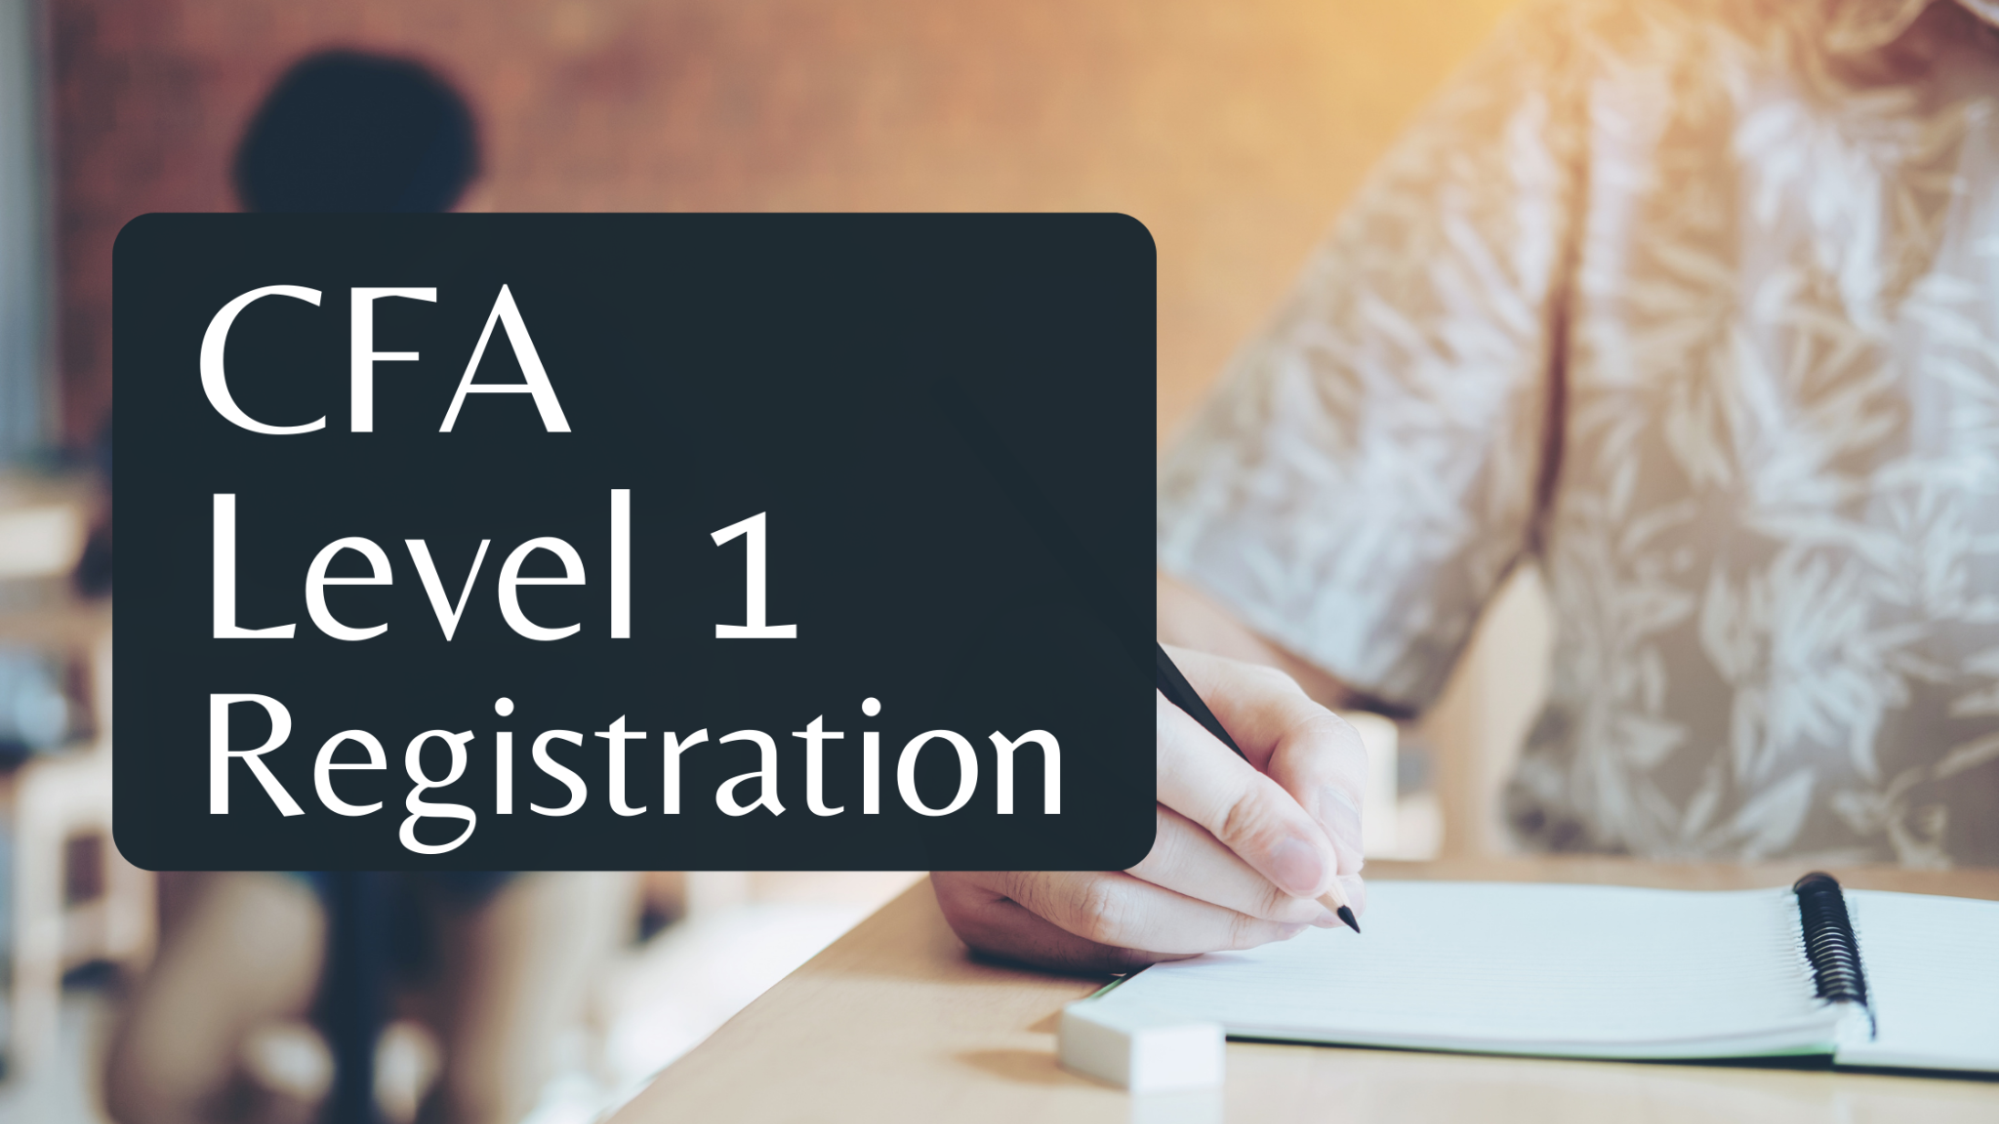 CFA Level 1 Registration